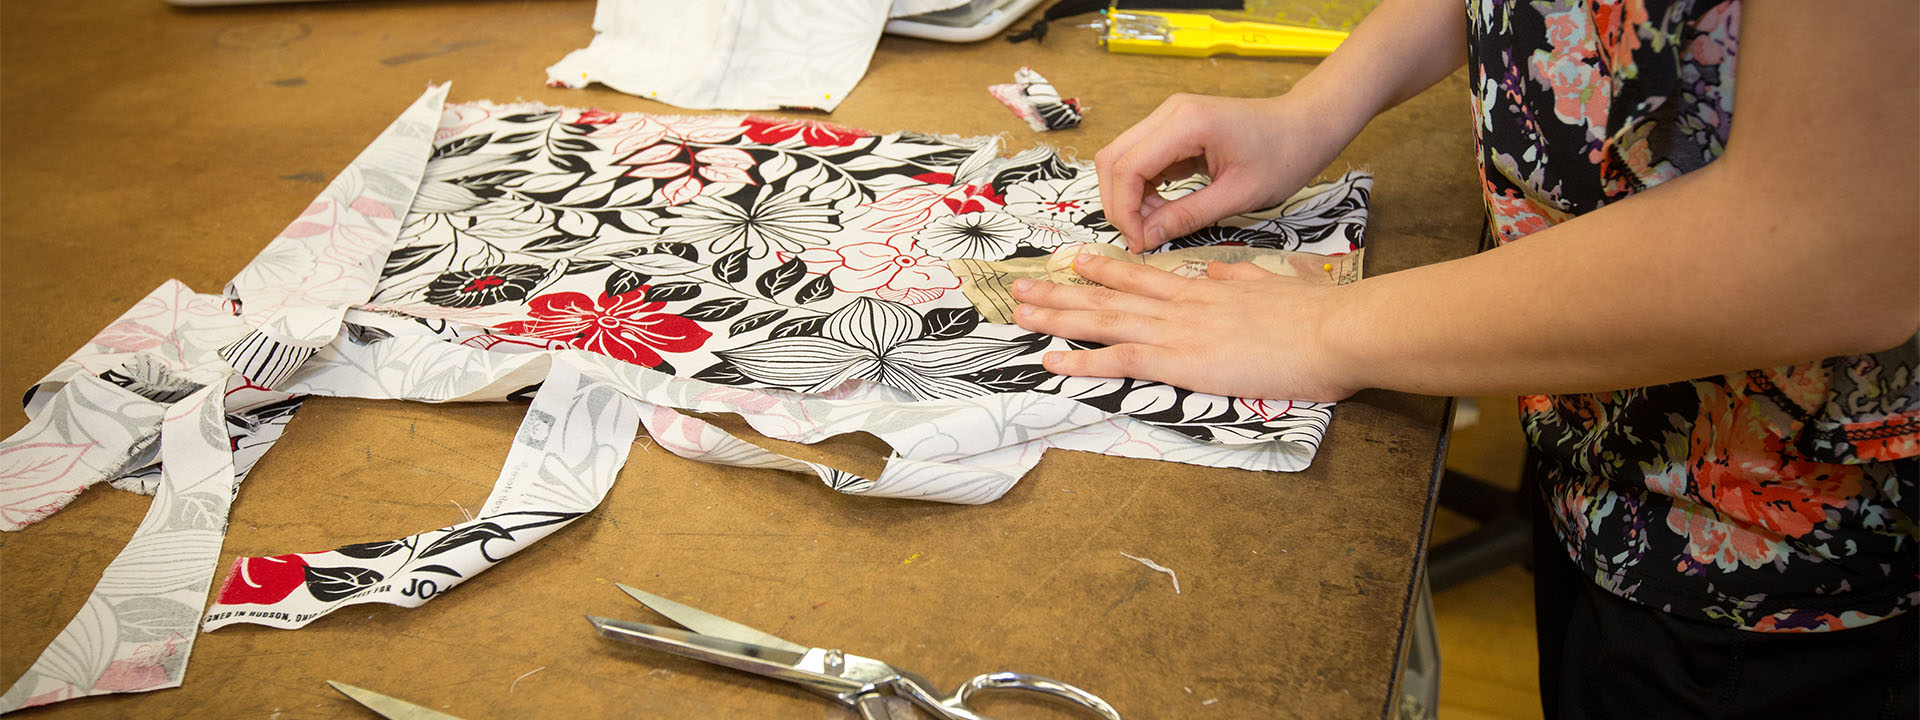 A woman pinning a pattern to fabric